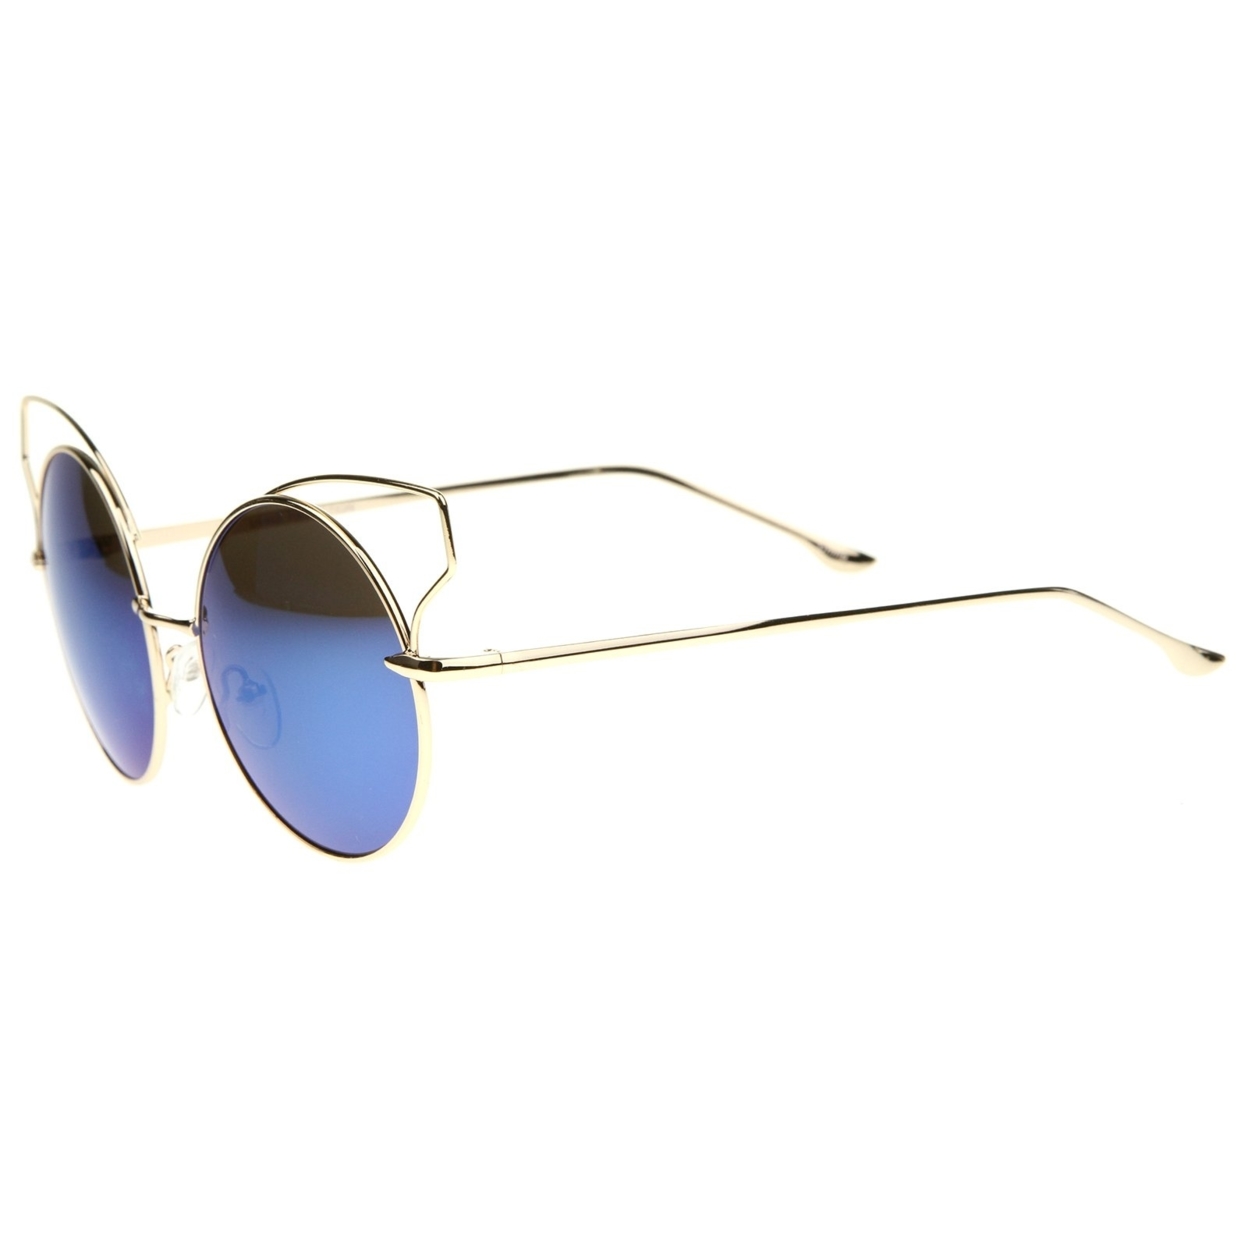 Women's Full Metal Open Design Mirrored Lens Round Cat Eye Sunglasses 55mm - Black / Magenta Mirror